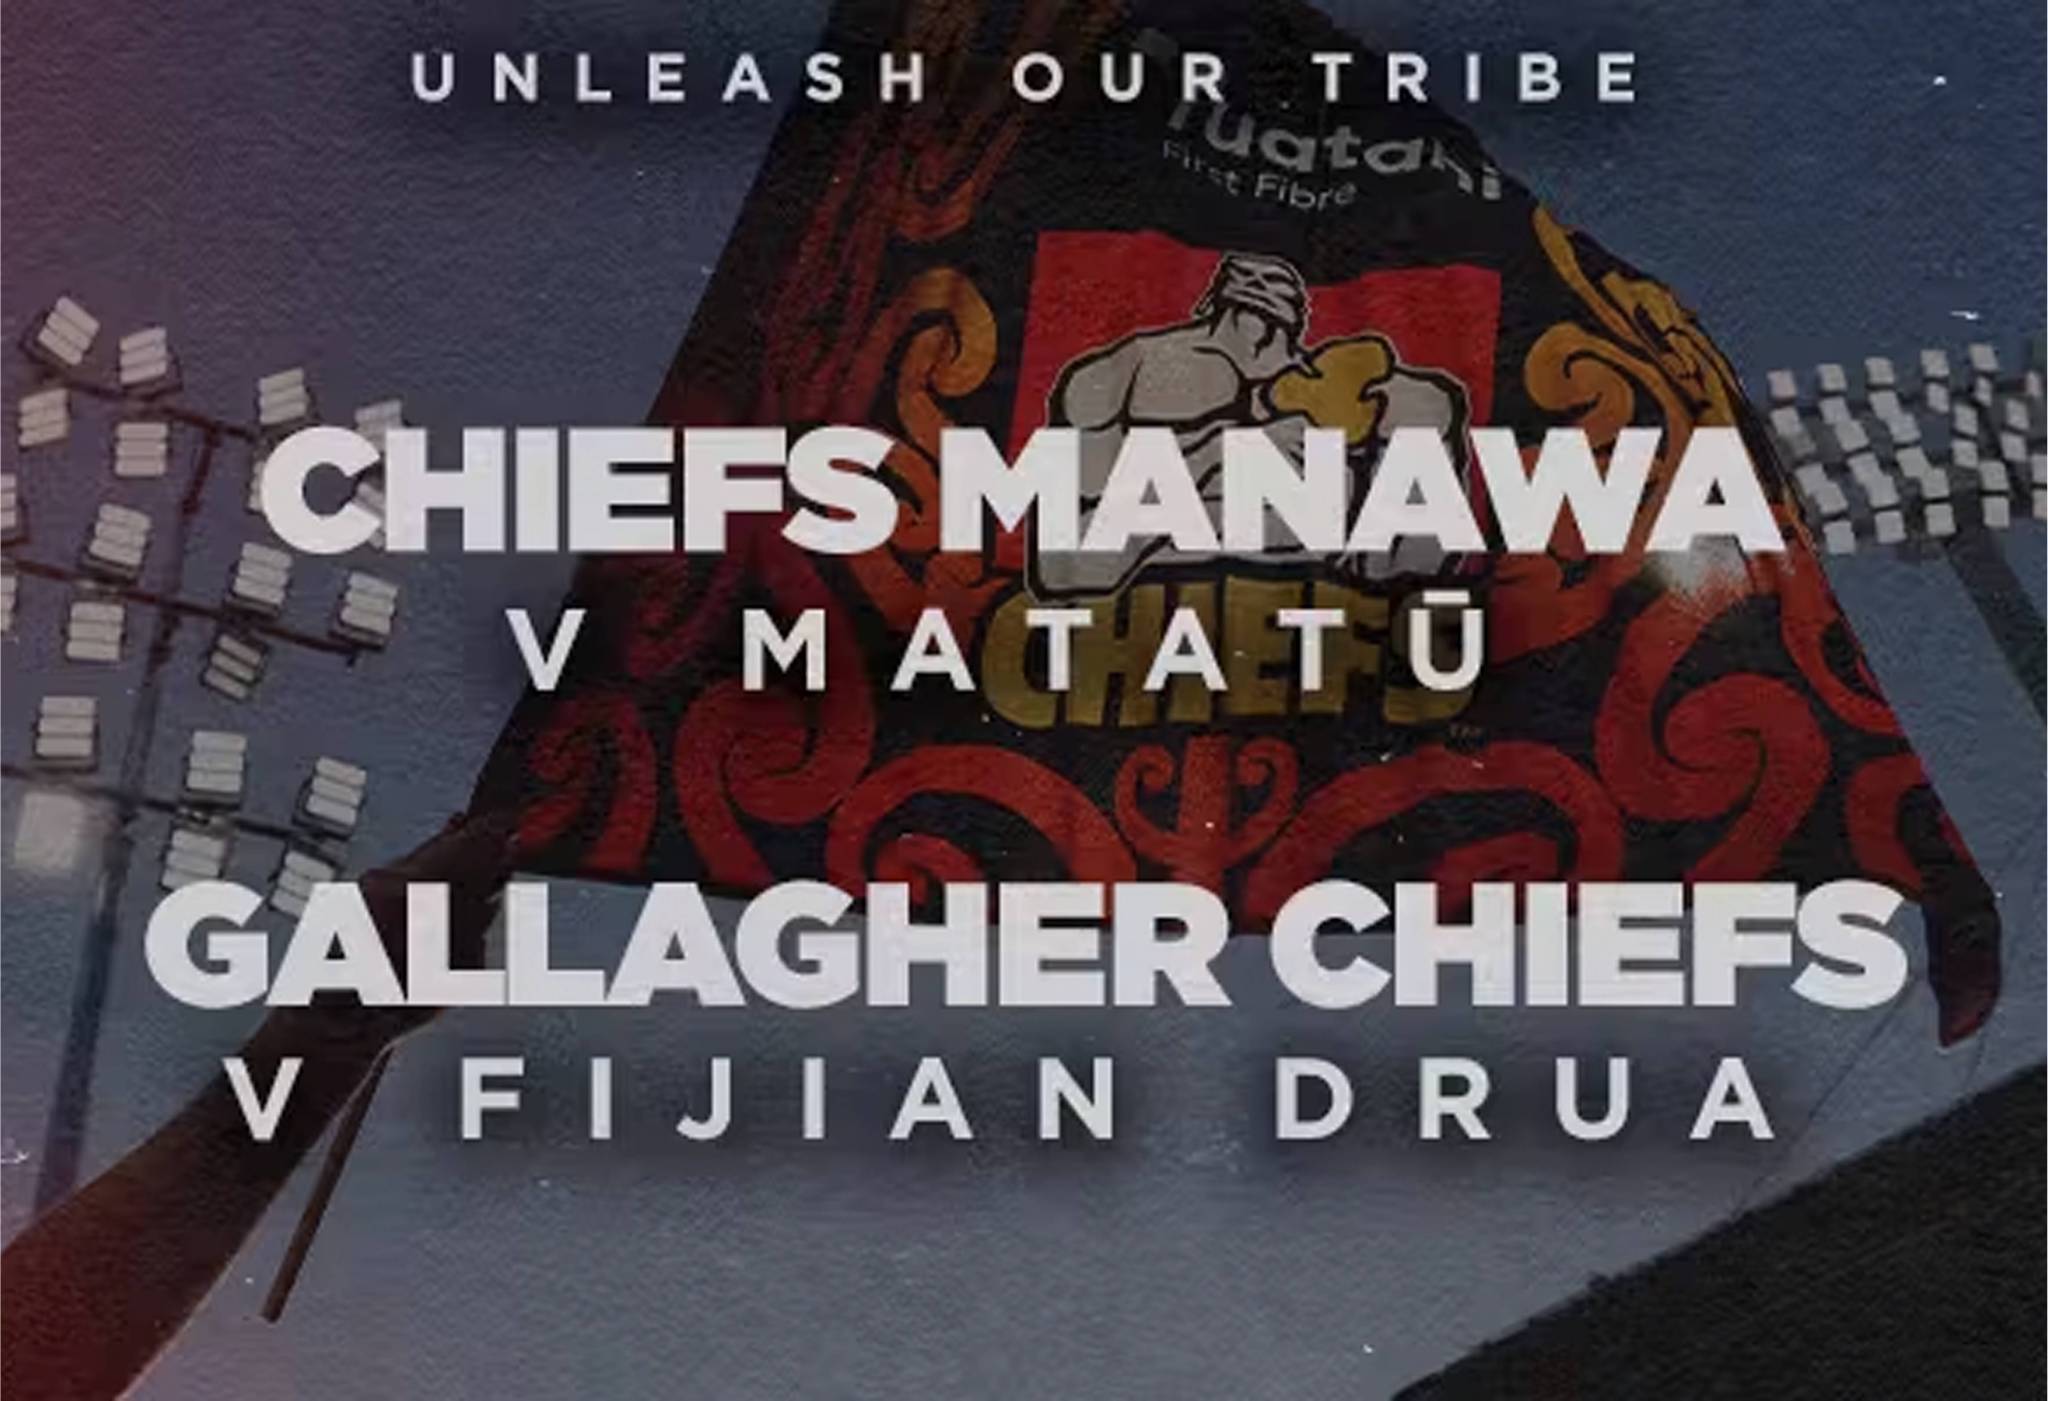 Super Rugby Pacific - Gallagher Chiefs vs Fijian Dura